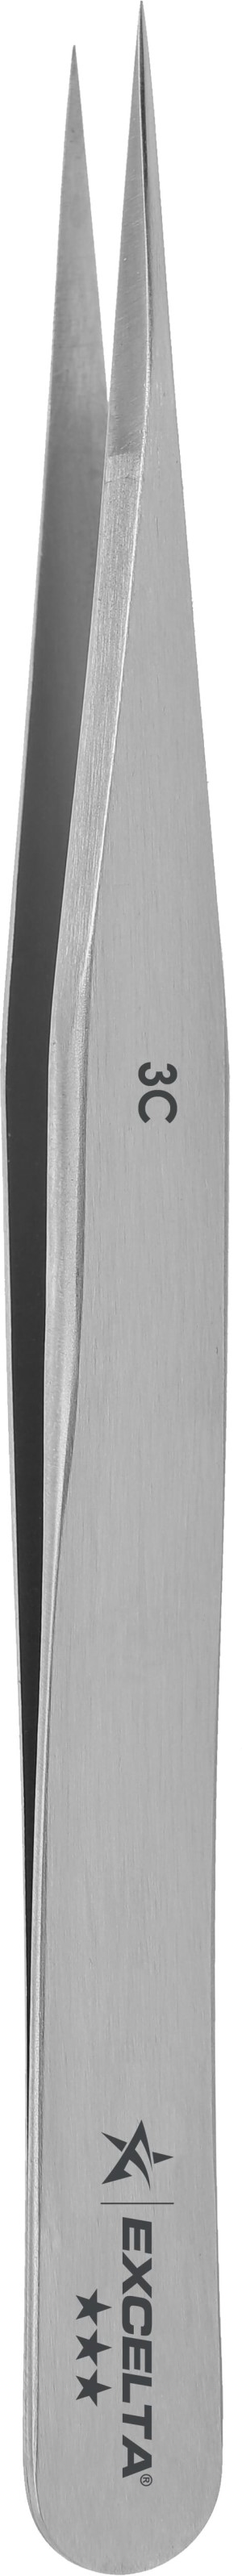 Tweezers - Straight Very Fine Point Carbon Steel 